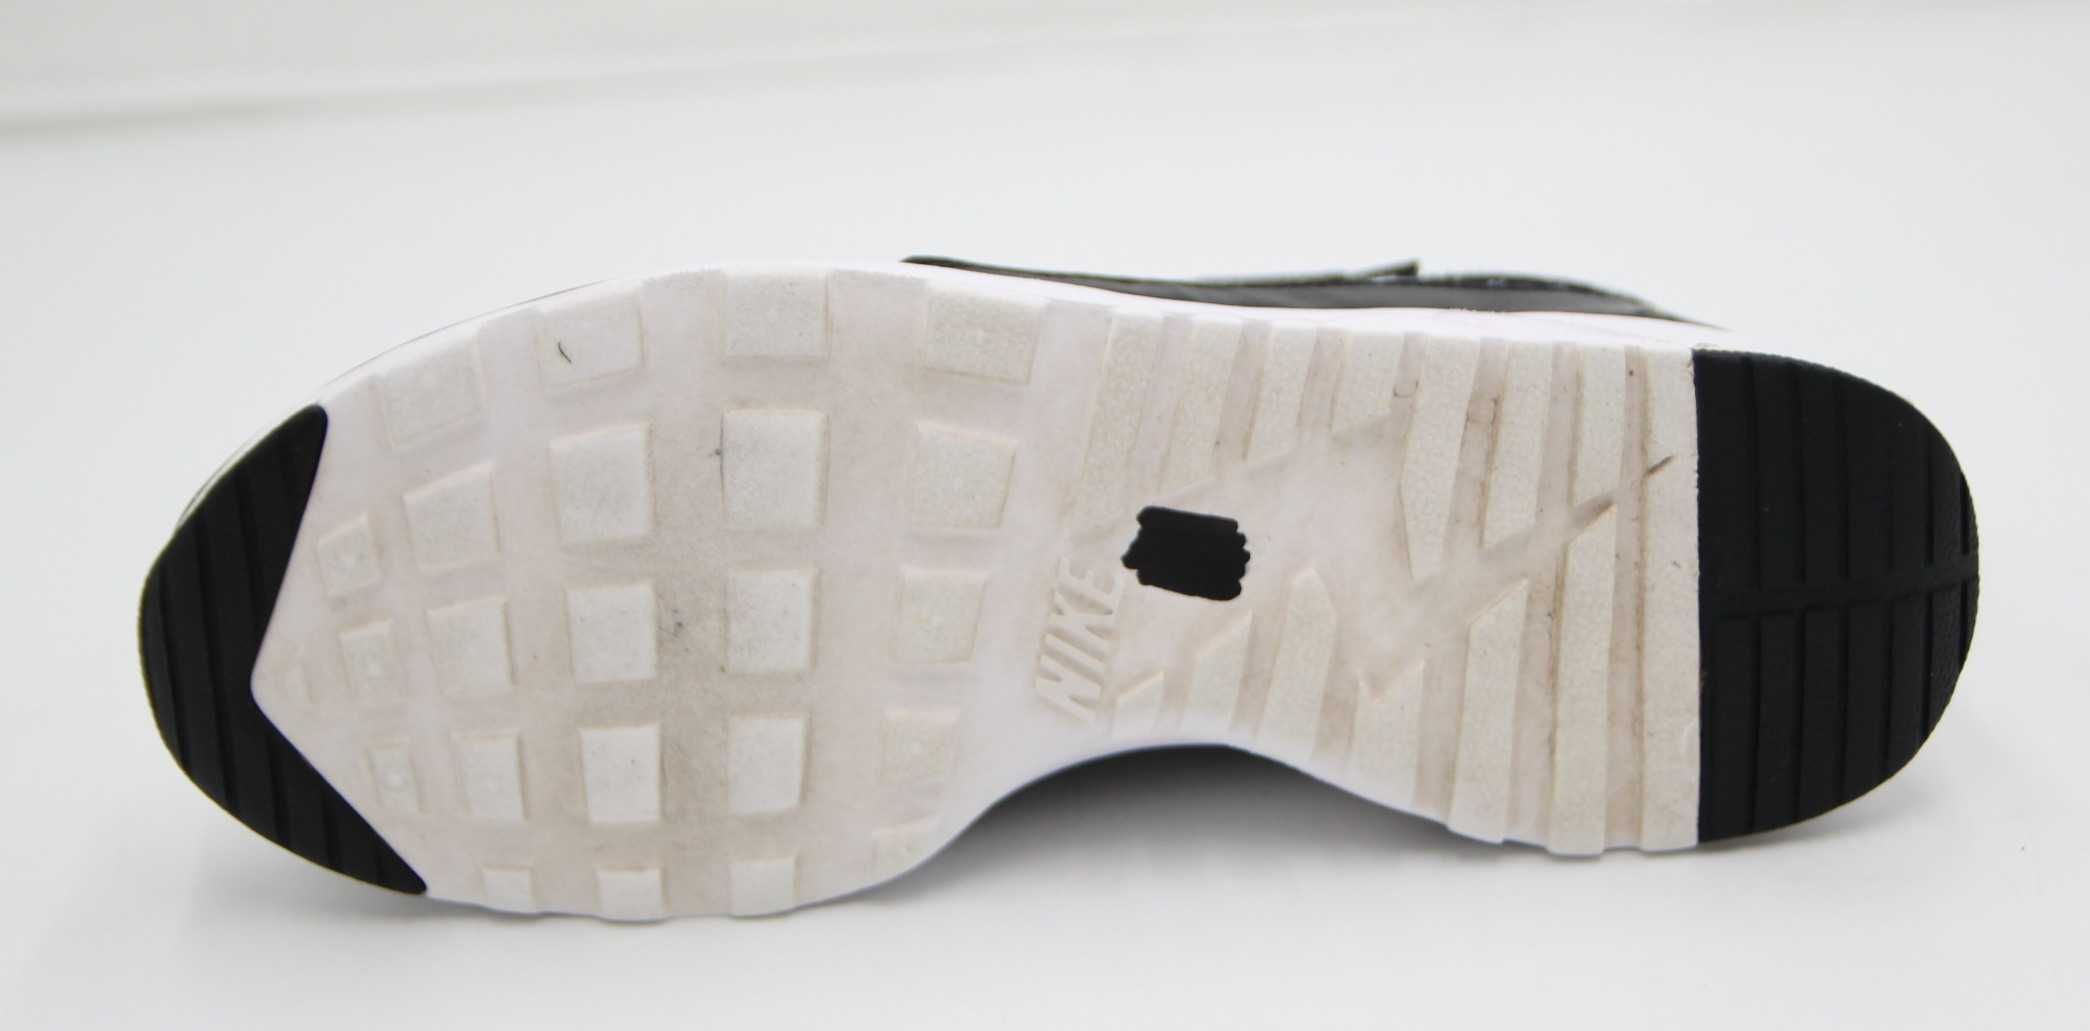 Nike Air Max damski buty sportowe 38,5 ( 25 CM)